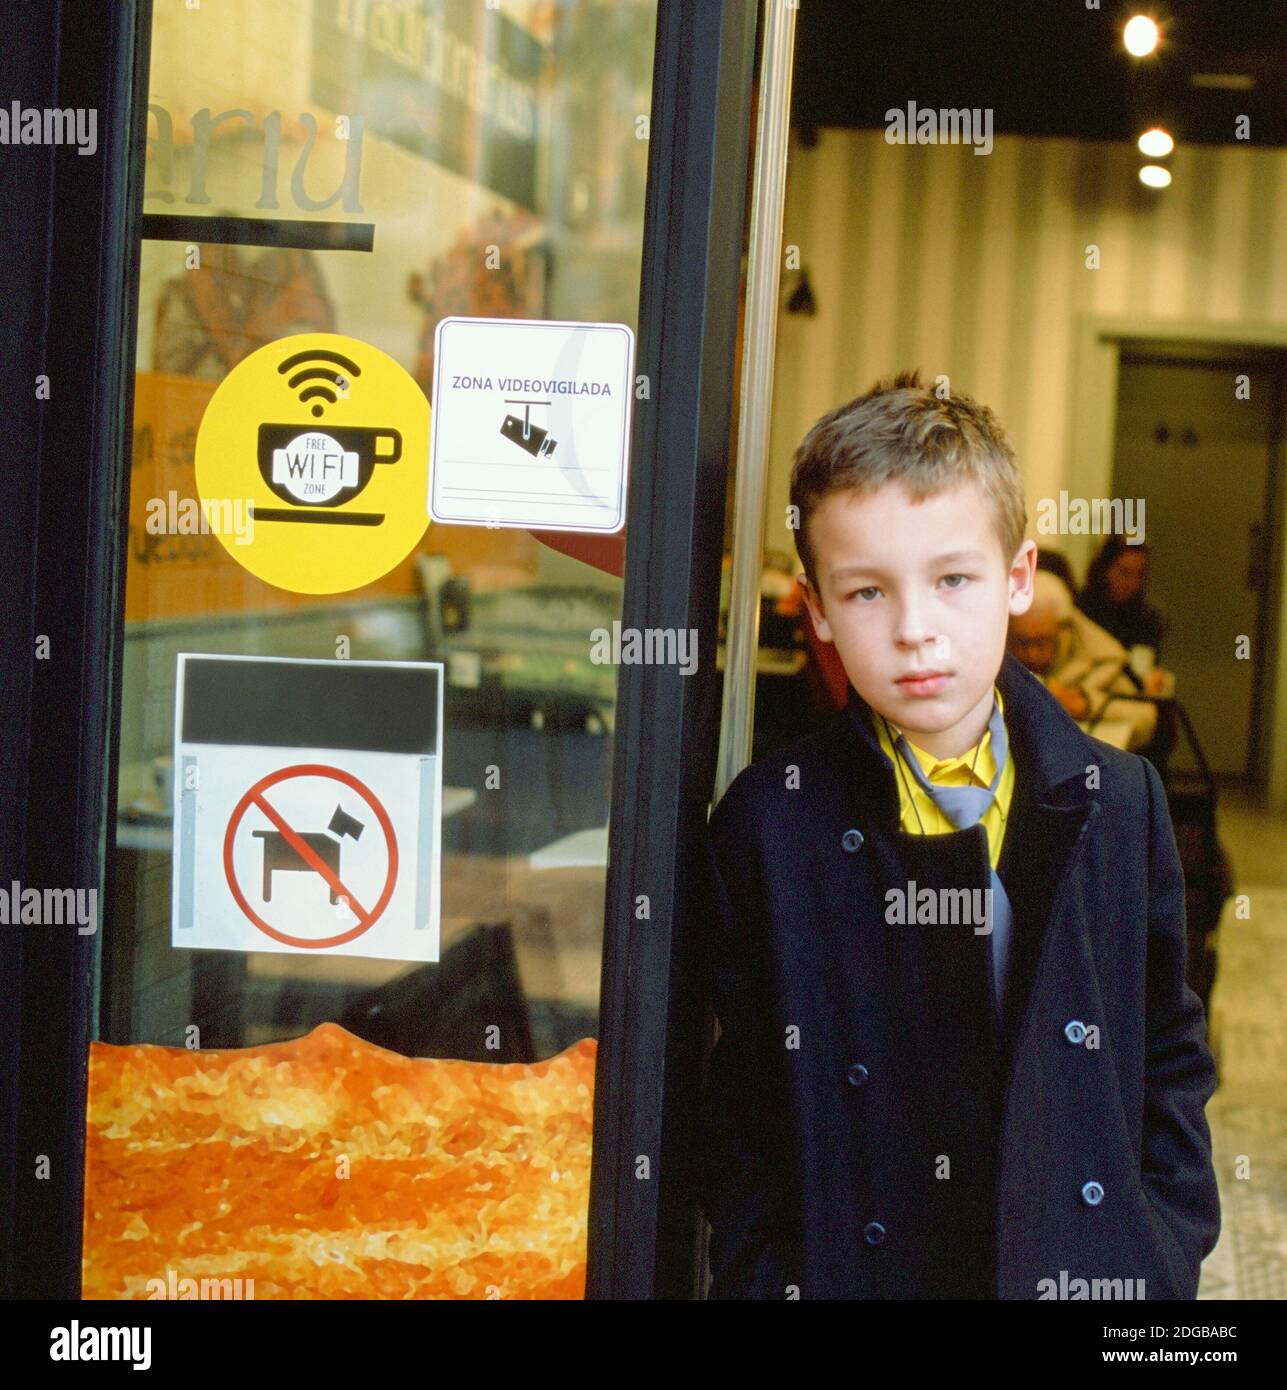 Schoolchild at the cafe doorway Stock Photo